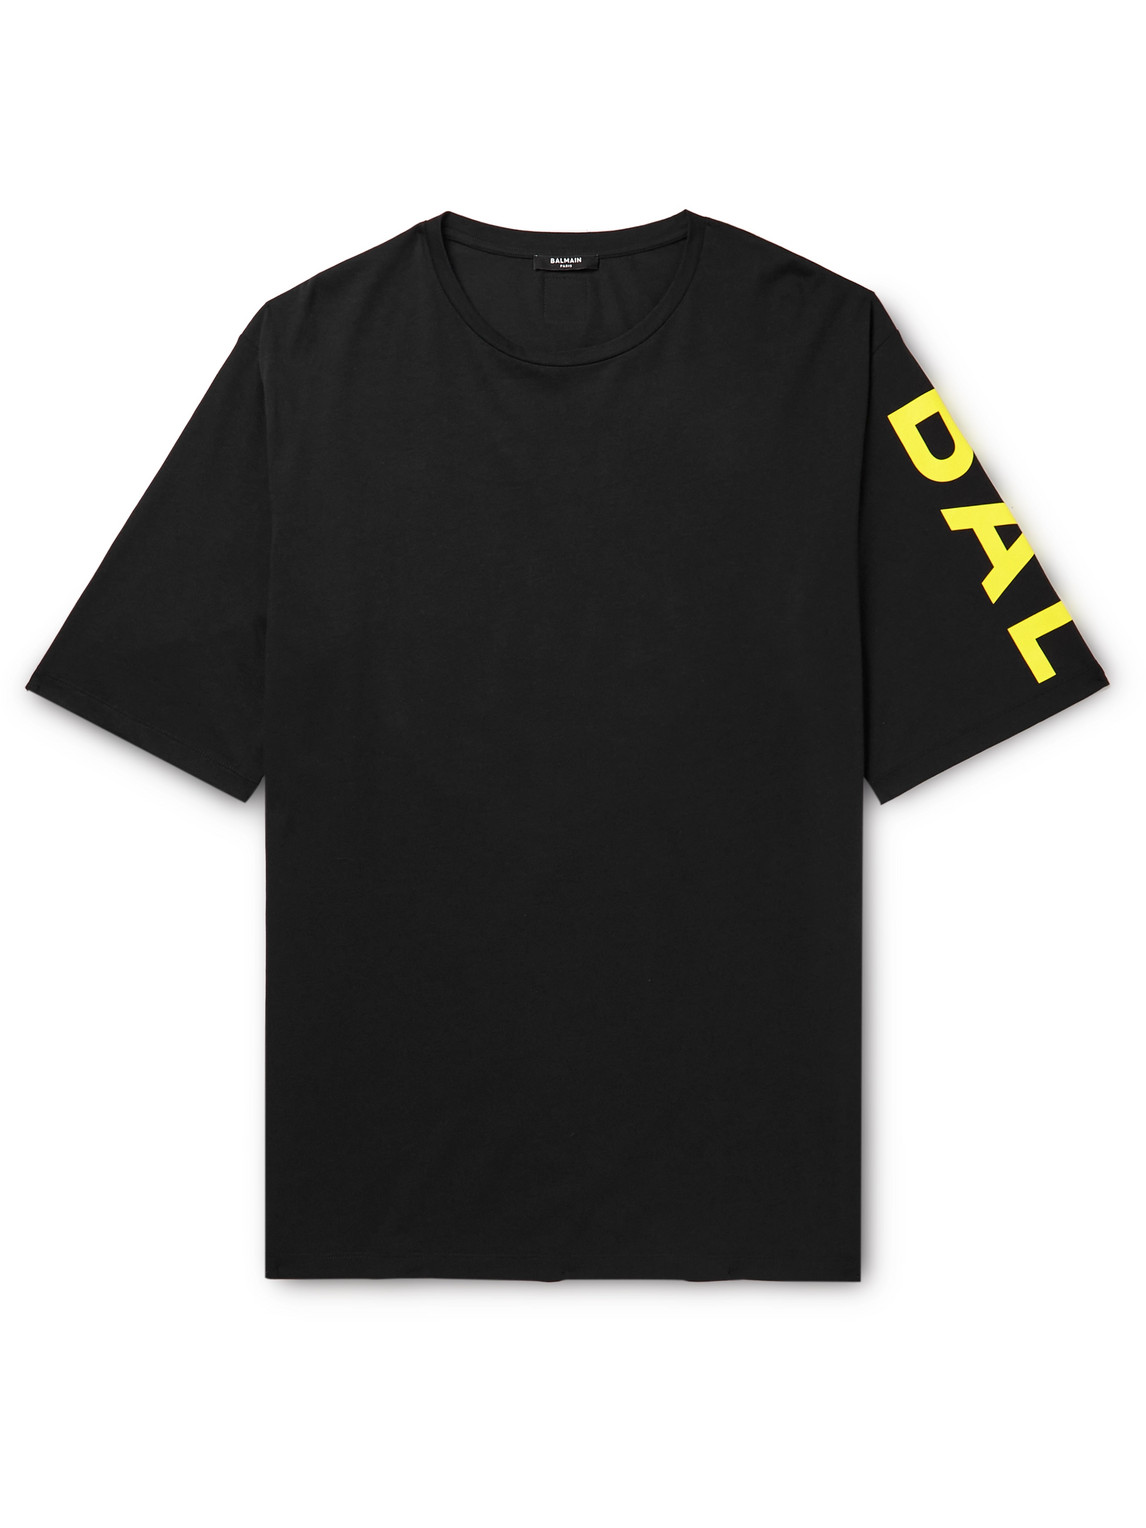 Balmain - Oversized Logo-Print Cotton-Jersey T-Shirt - Men - Black - S